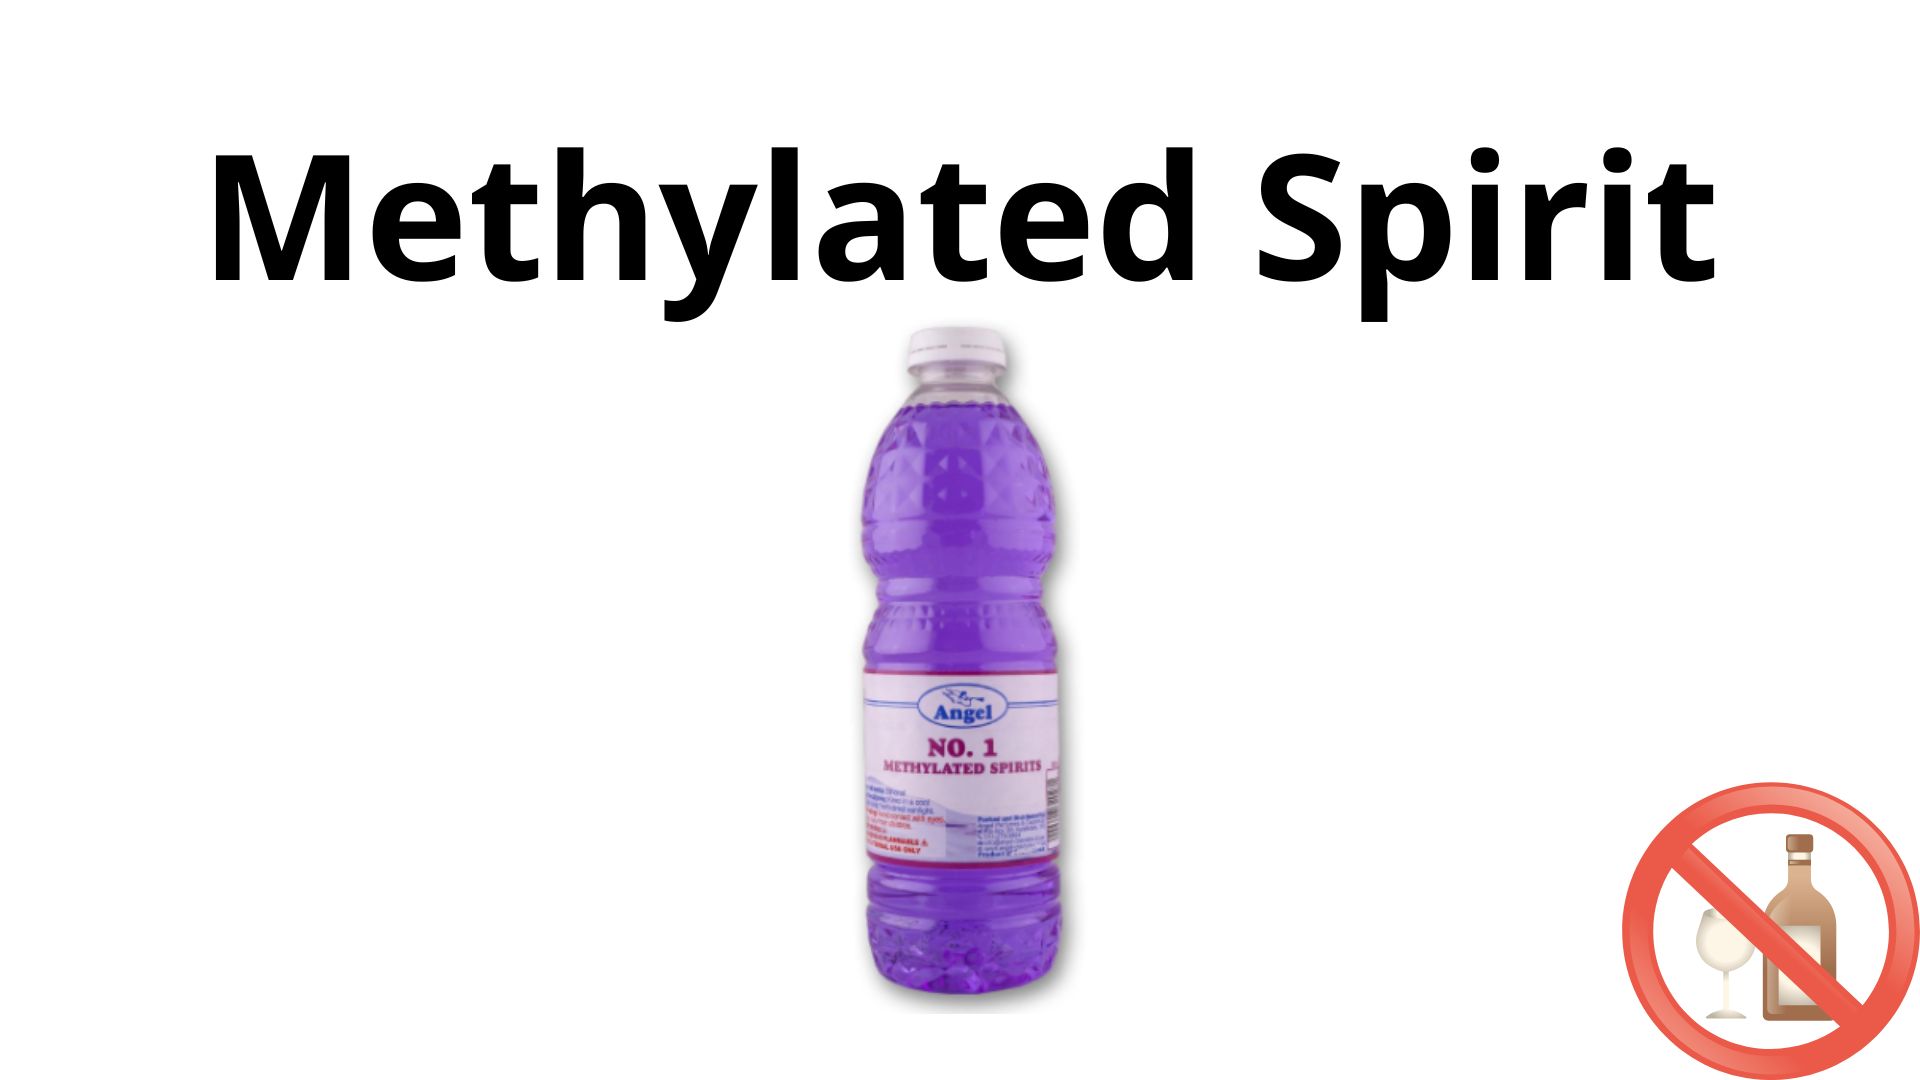 Methylated spirit